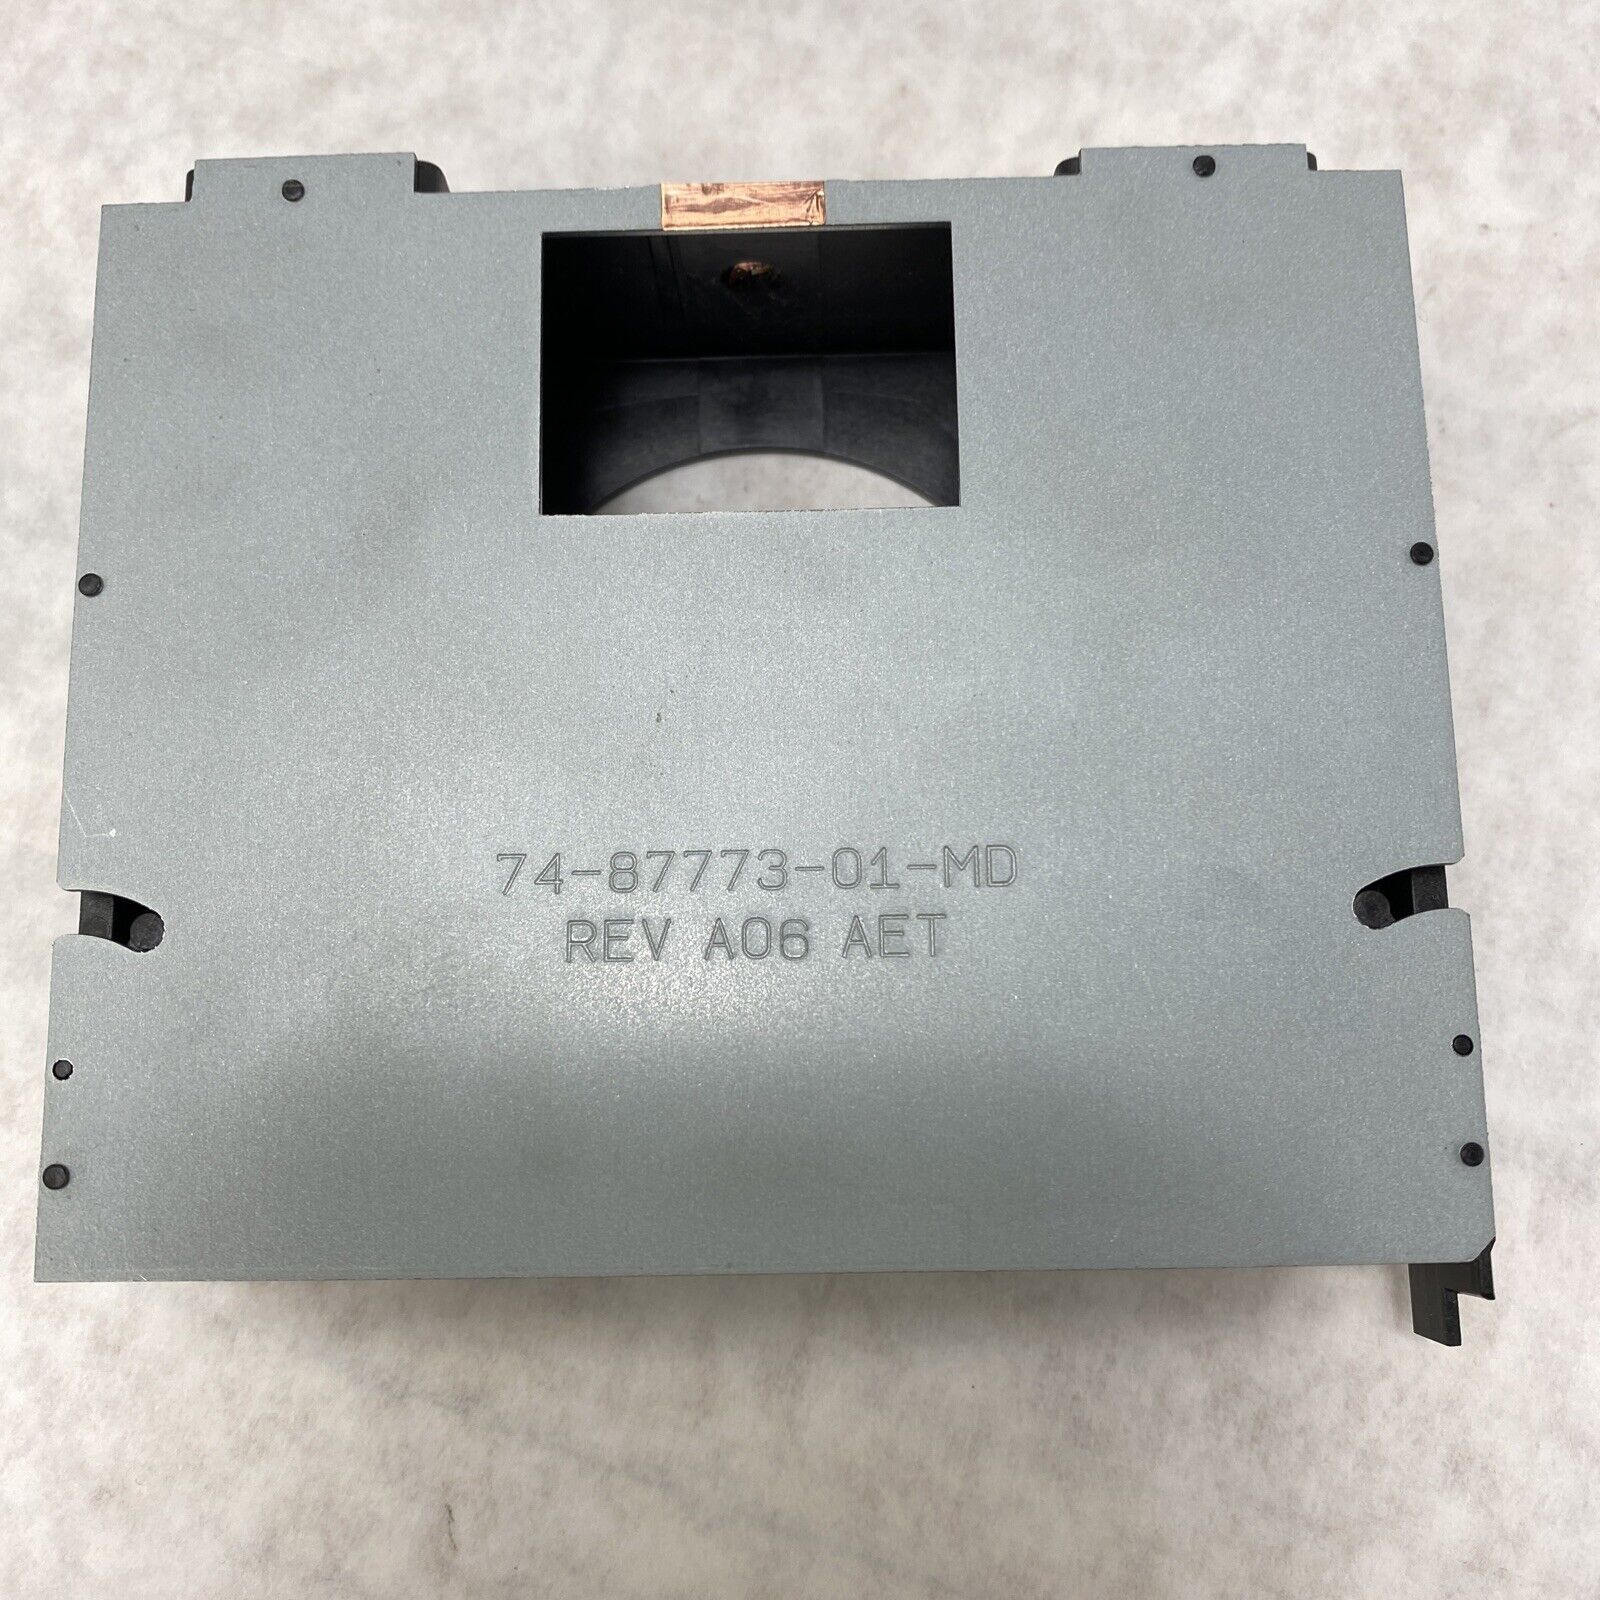 Lot(2) Sun74-87773-01-MD PX502 LTO Tape Loader Cartridge Case C2156G 74-87772-01